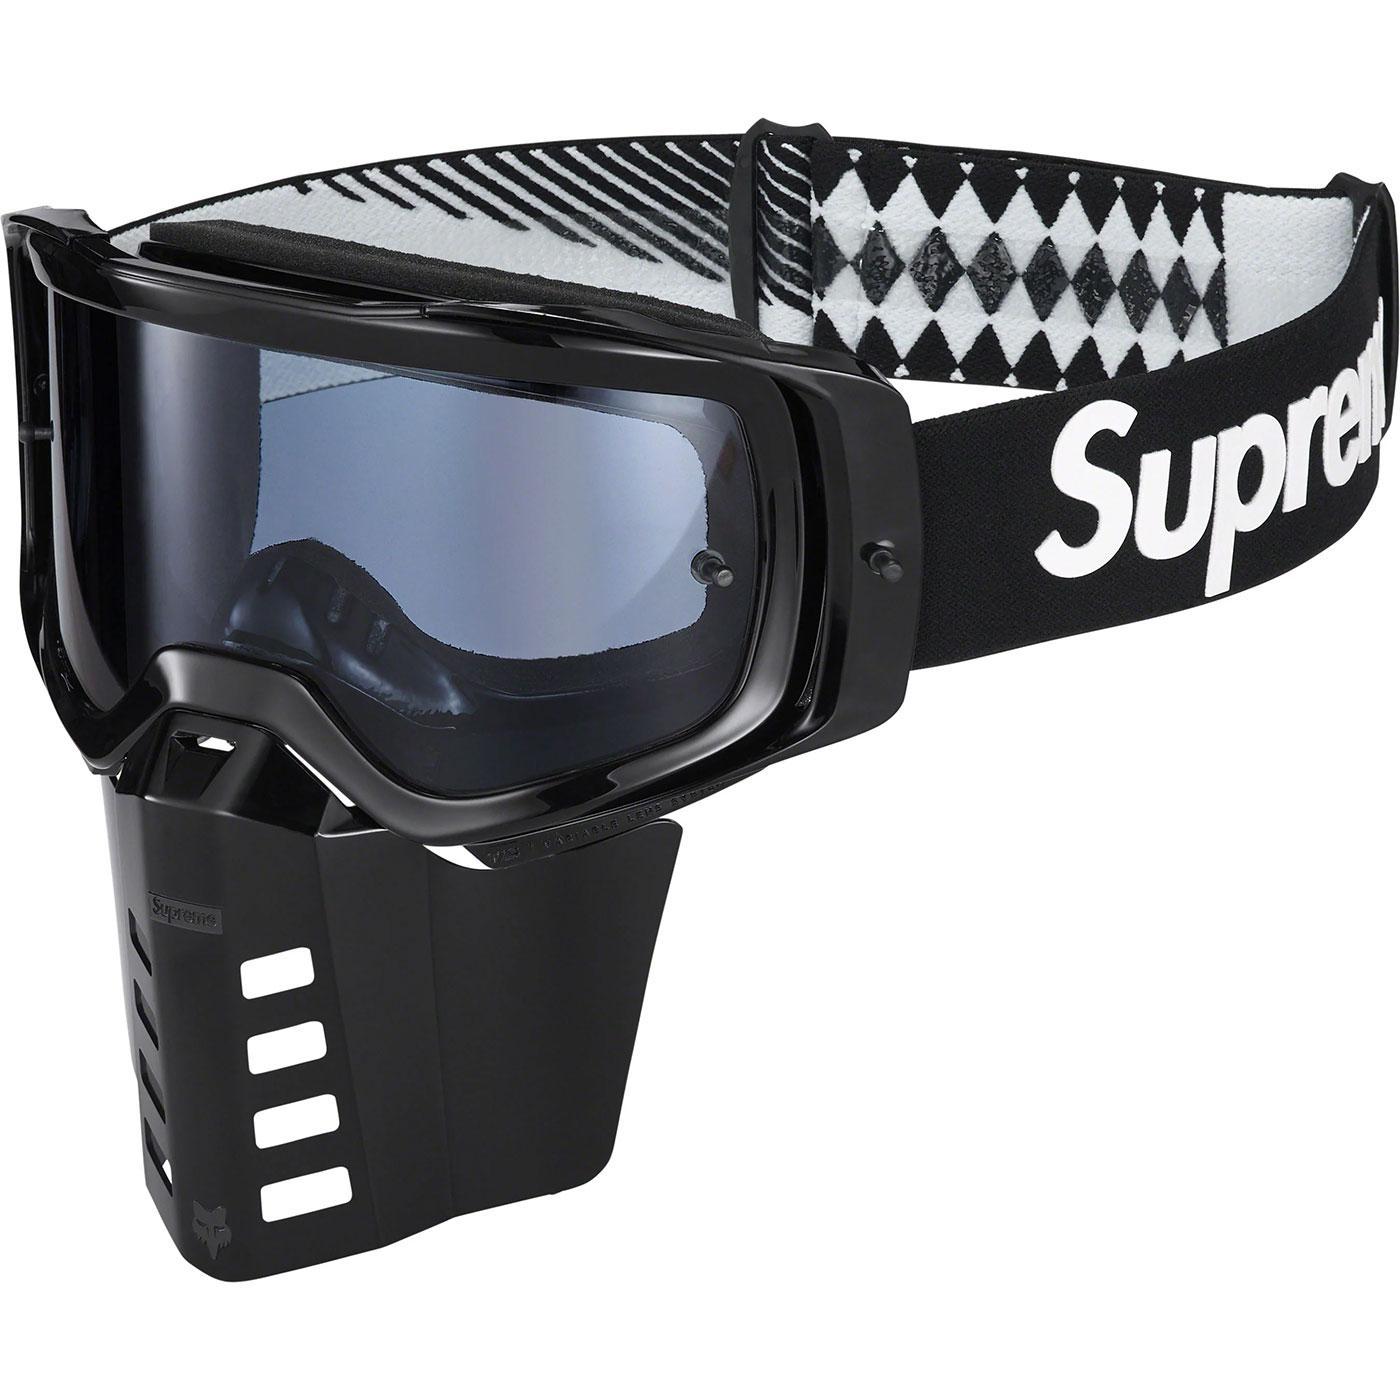 Supreme/Fox Racing® Goggles (Black) – Urban Street Wear